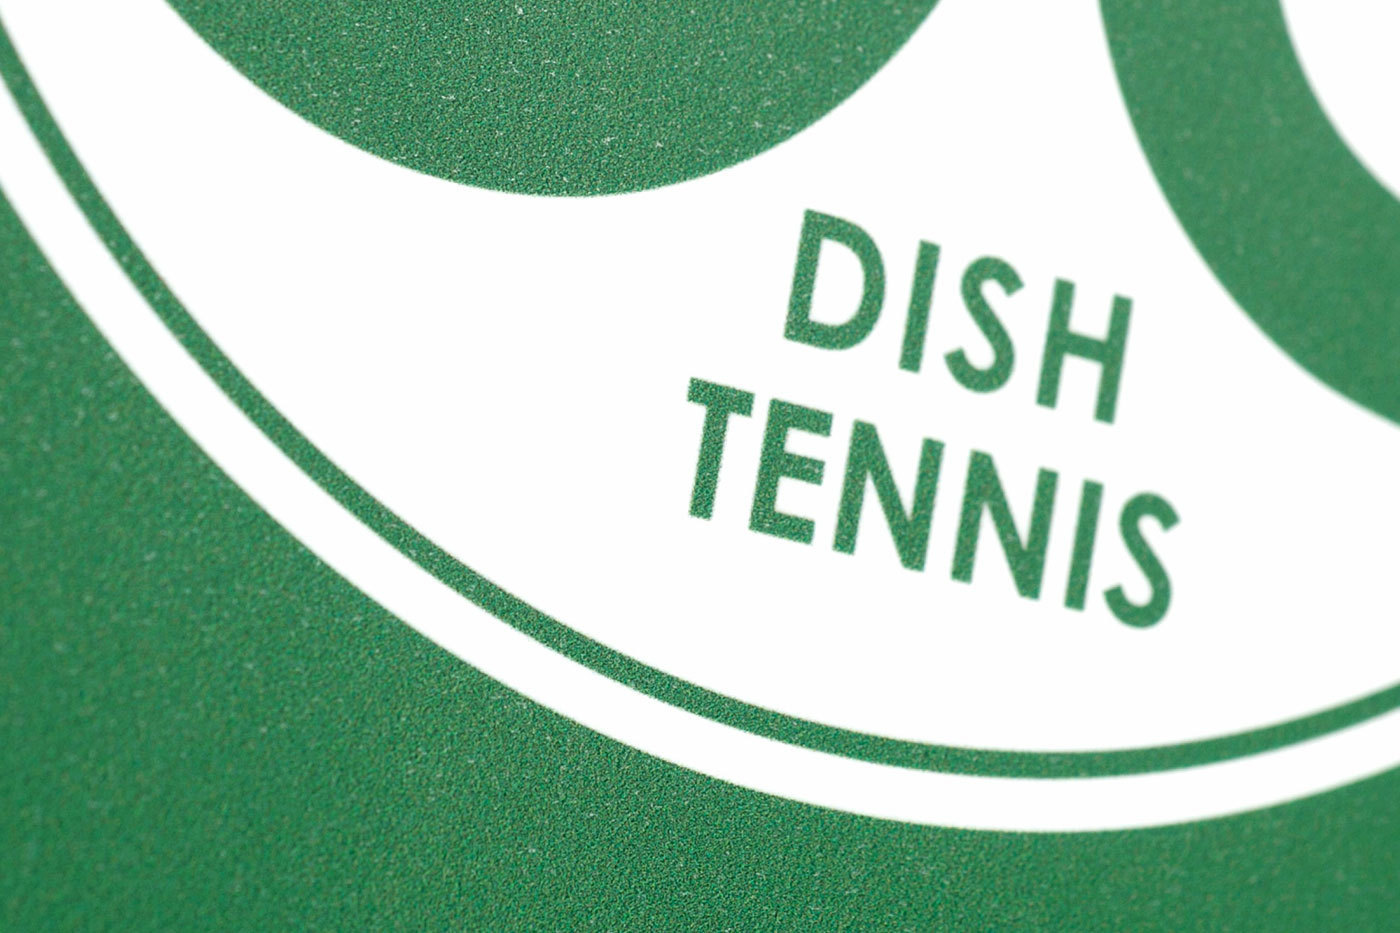 Dish Tennis table tennis table